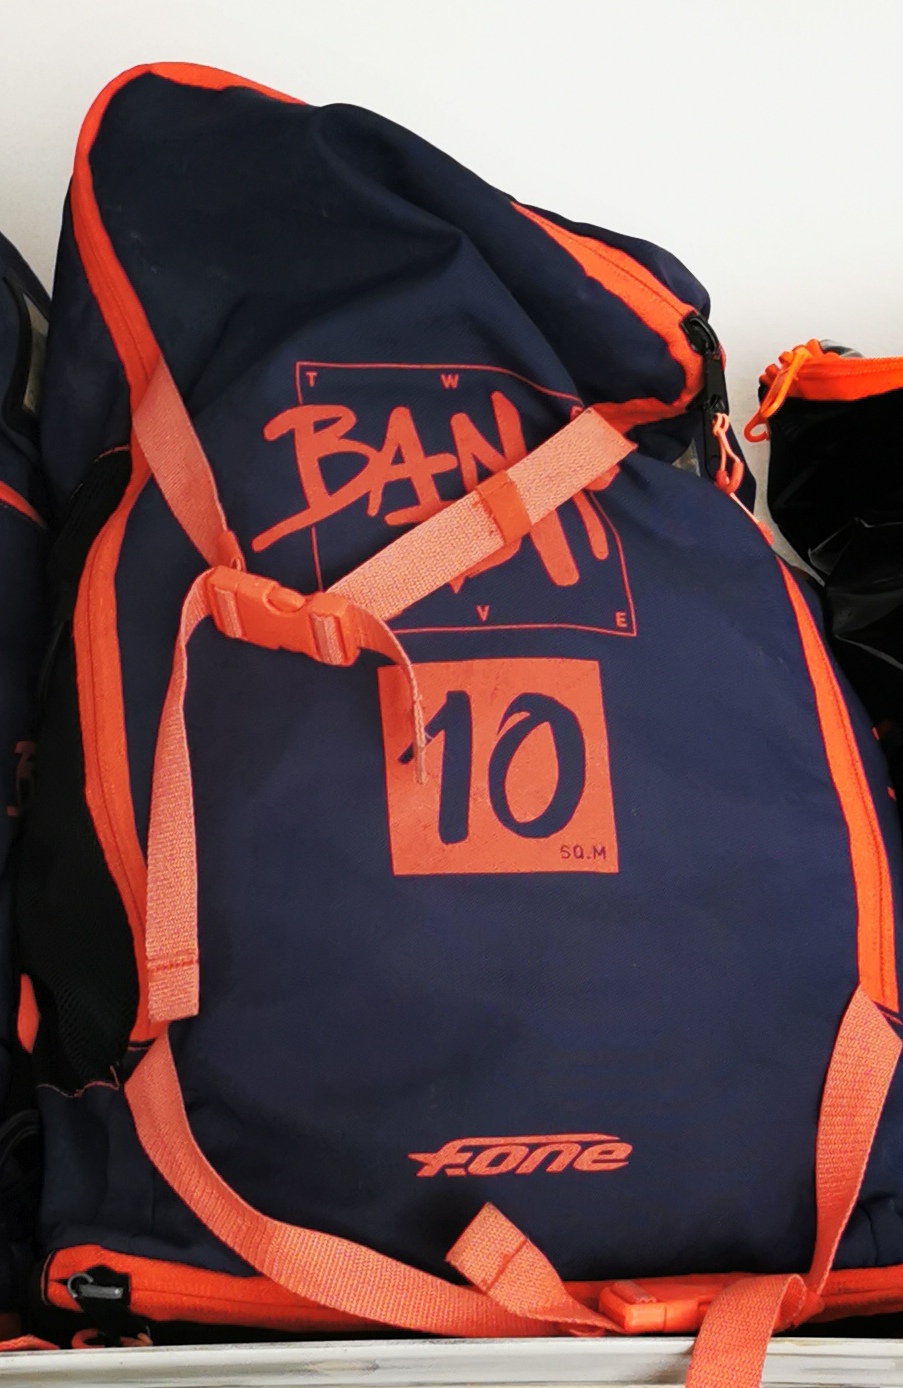 F-ONE BANDIT 10 CON BARRA 2019 